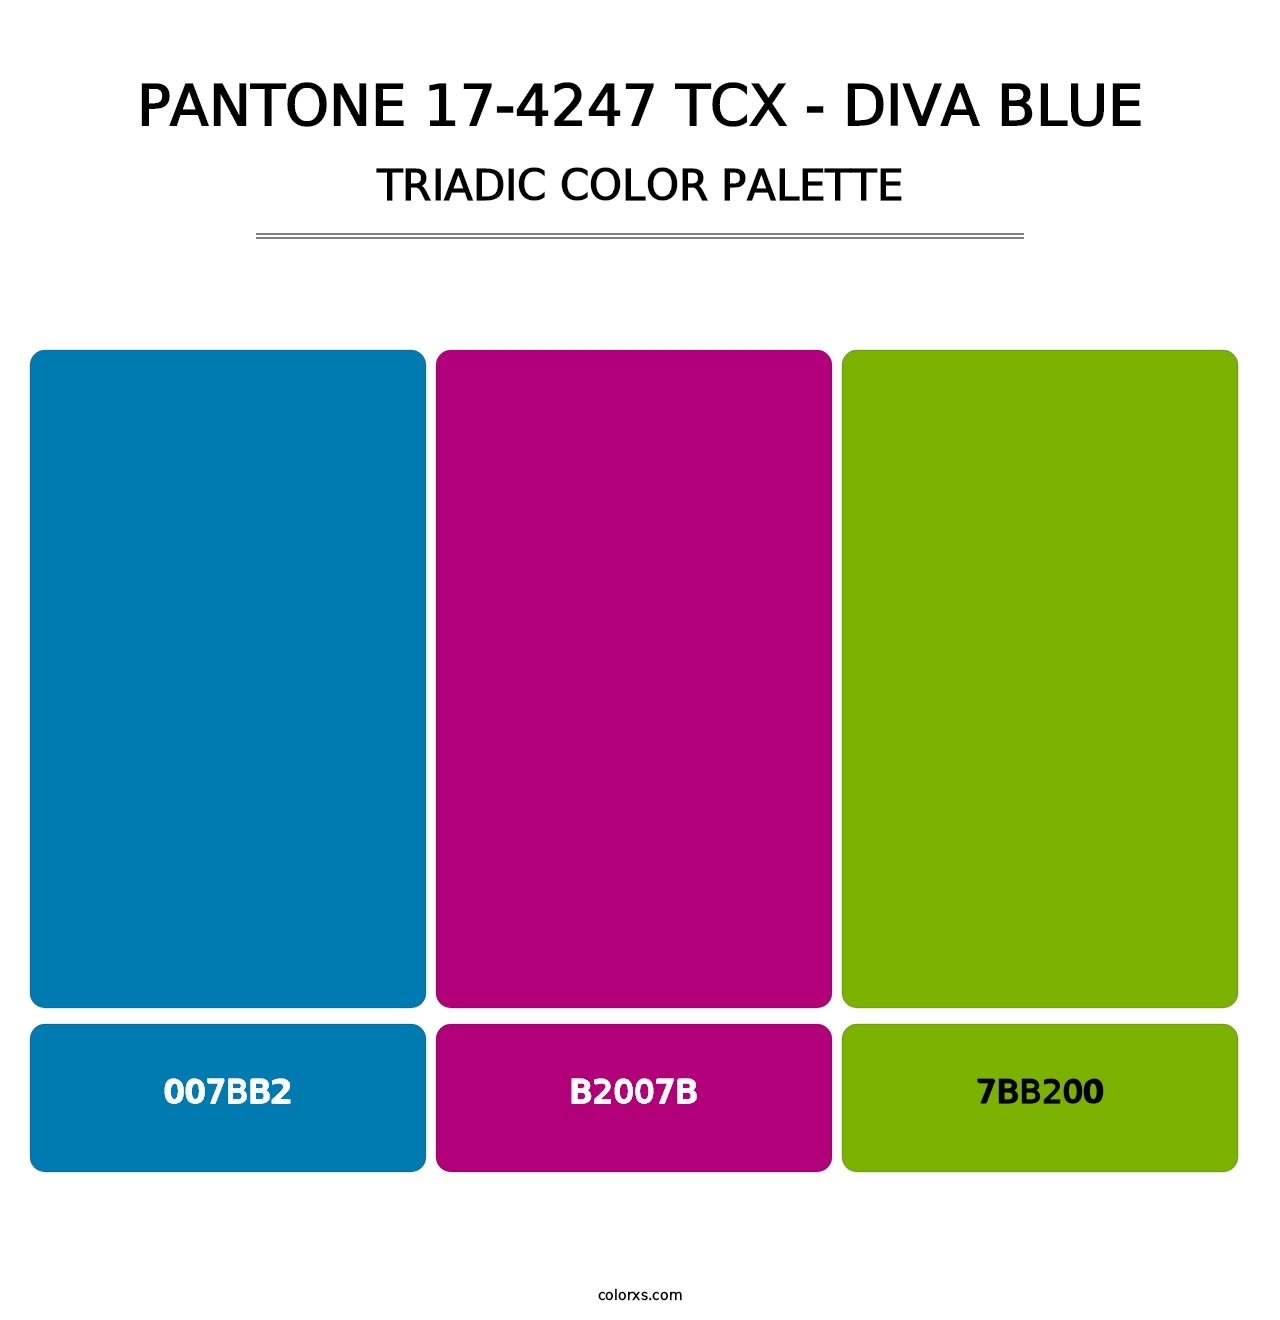 PANTONE 17-4247 TCX - Diva Blue - Triadic Color Palette